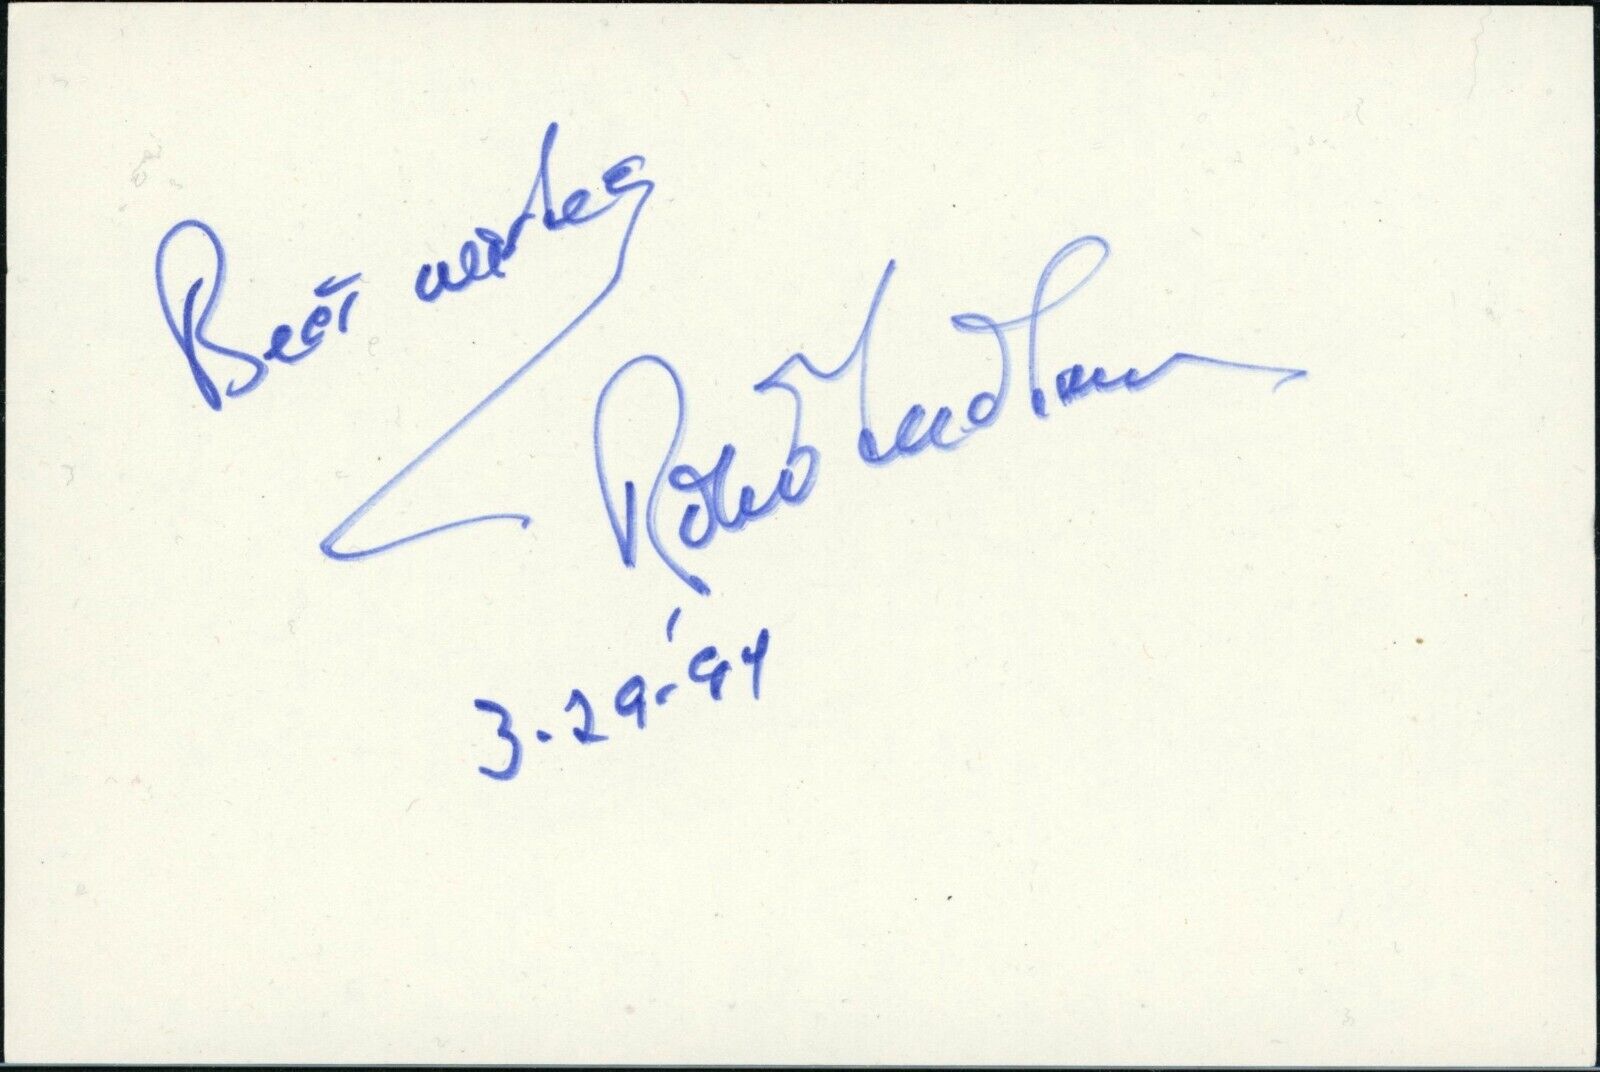 Author Robert Ludlum Autograph - The Bourne Trilogy